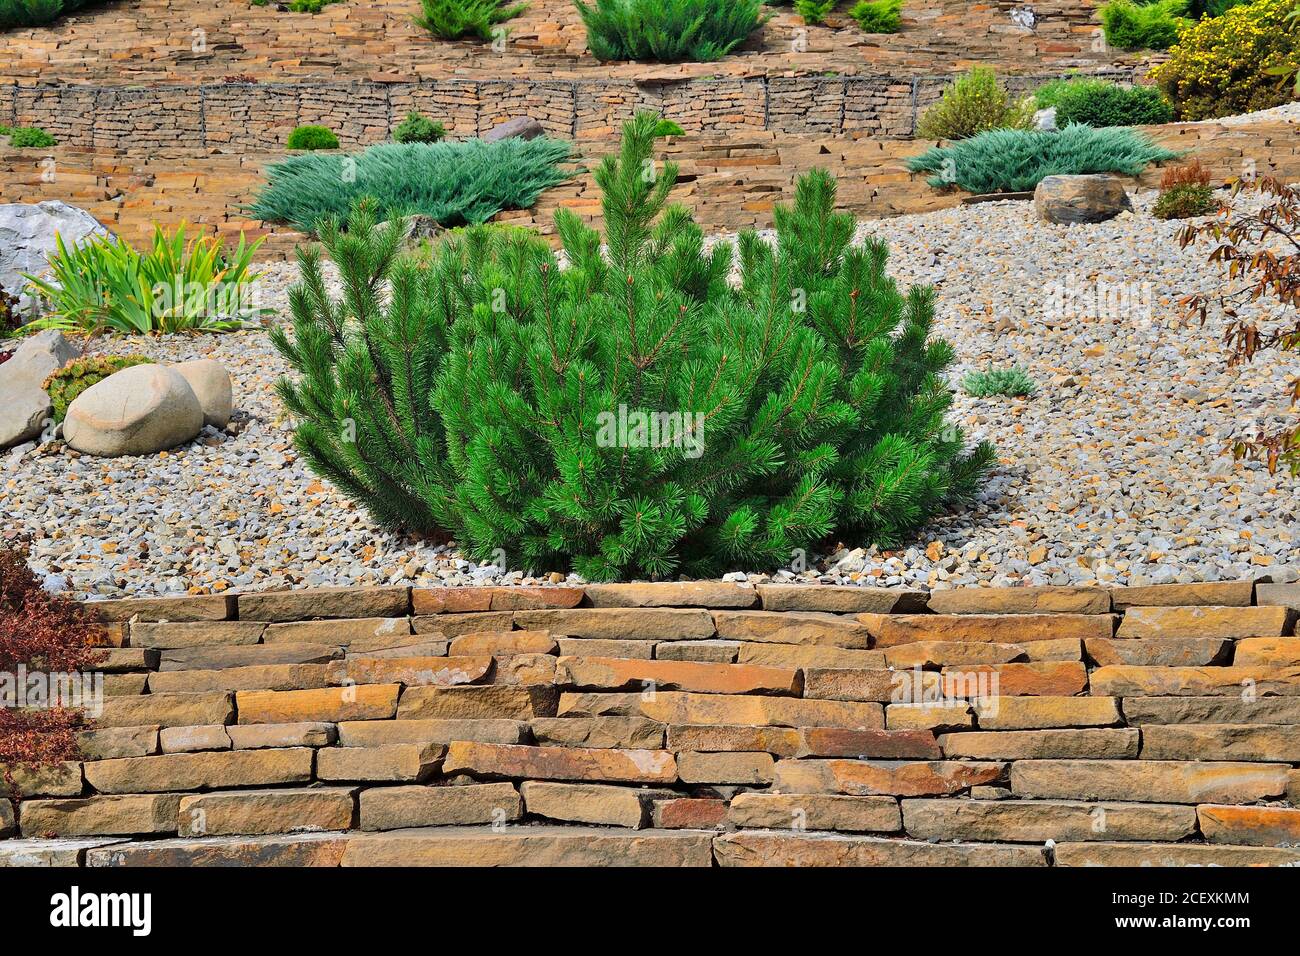 Dwarf bosnian pine tree Pinus leucodermis - decorative undersize evergreen coniferous plant in rocky garden. Gardening, horticulture or landscape desi Stock Photo